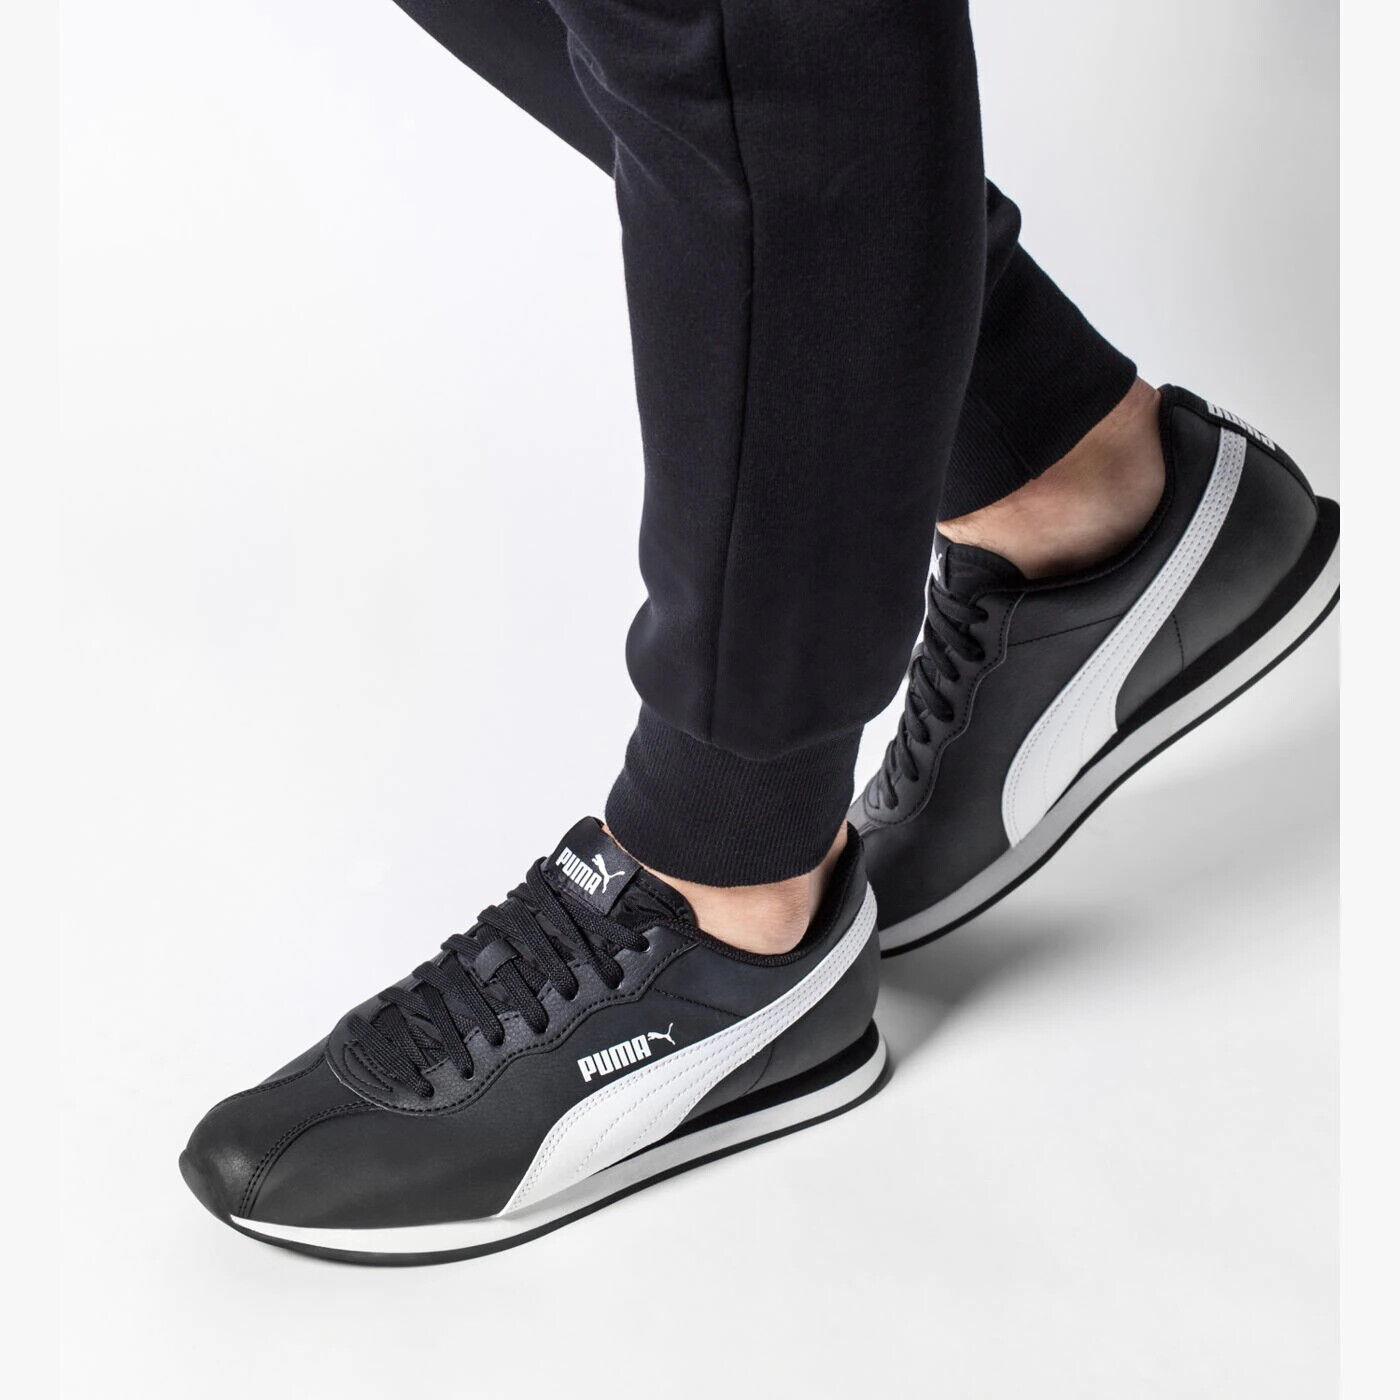 Puma Turin II Men`s Sneakers Shoe Basics Casual Black Size 10.5